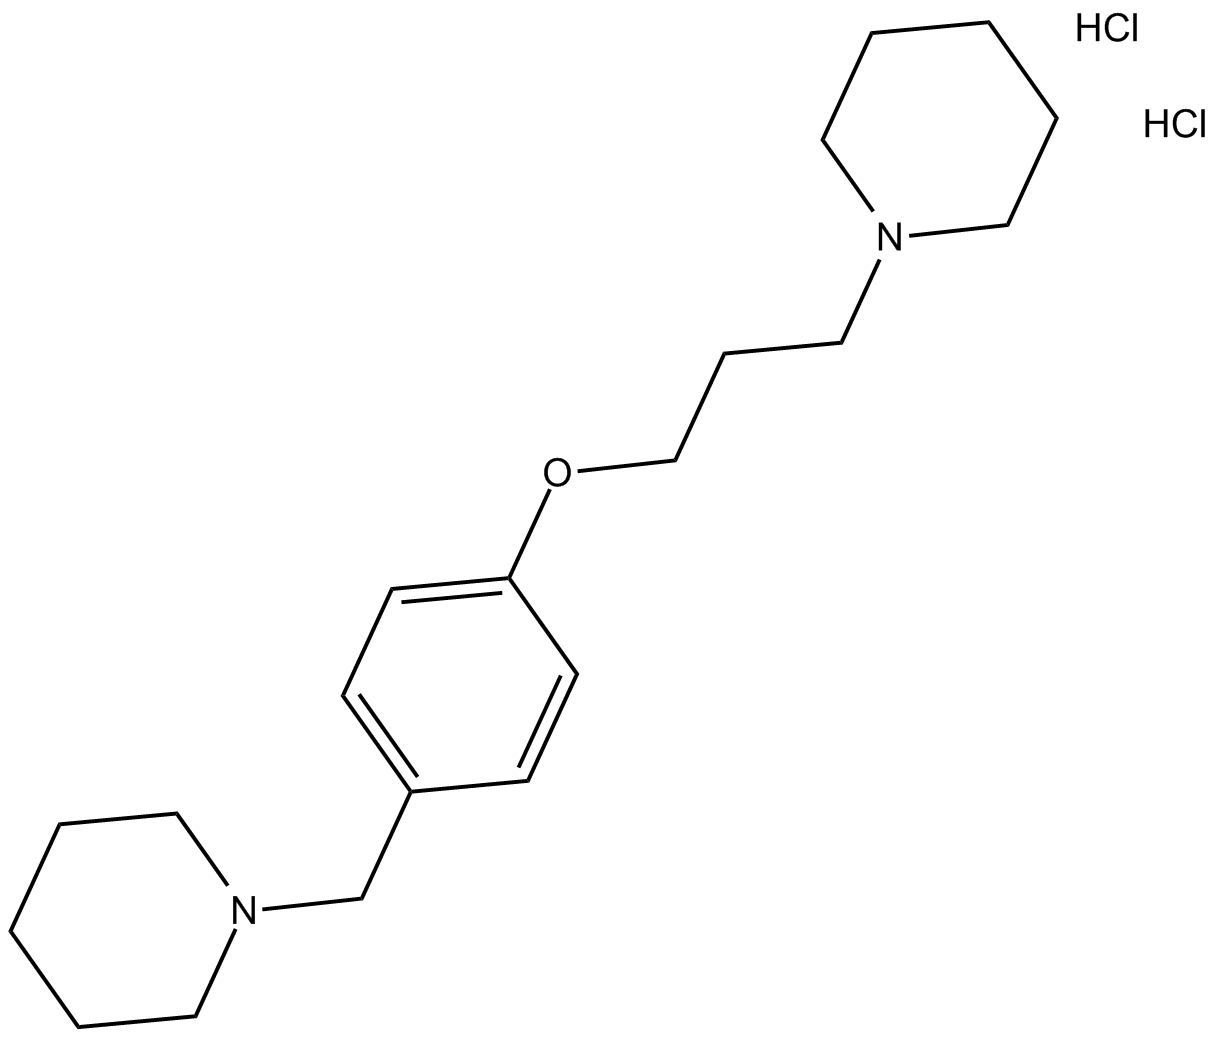 JNJ 5207852 dihydrochloride  Chemical Structure